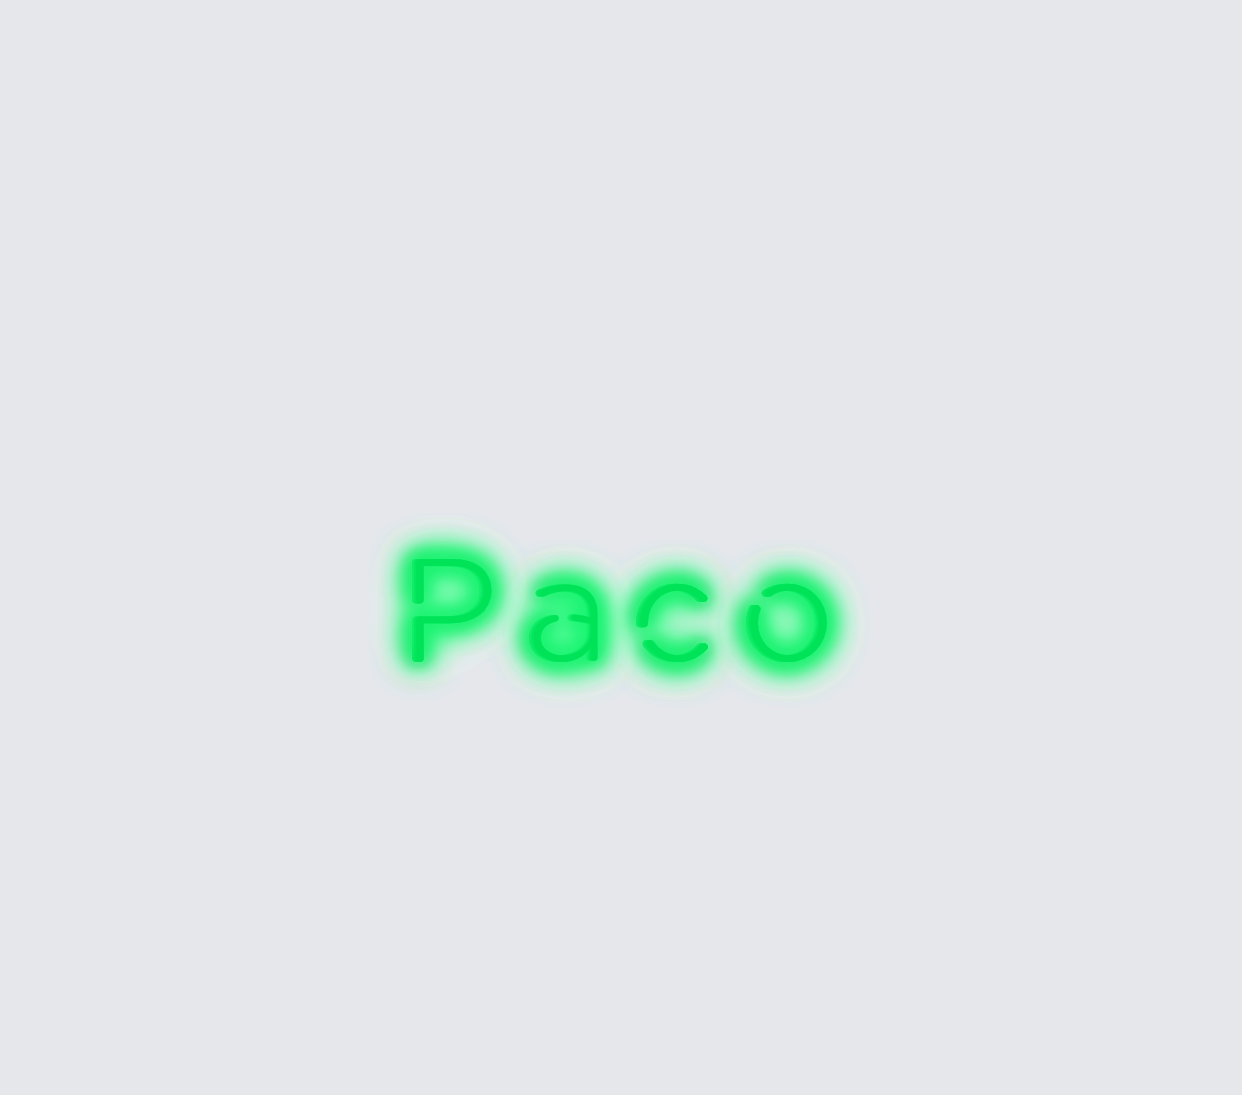 Custom neon sign - Paco